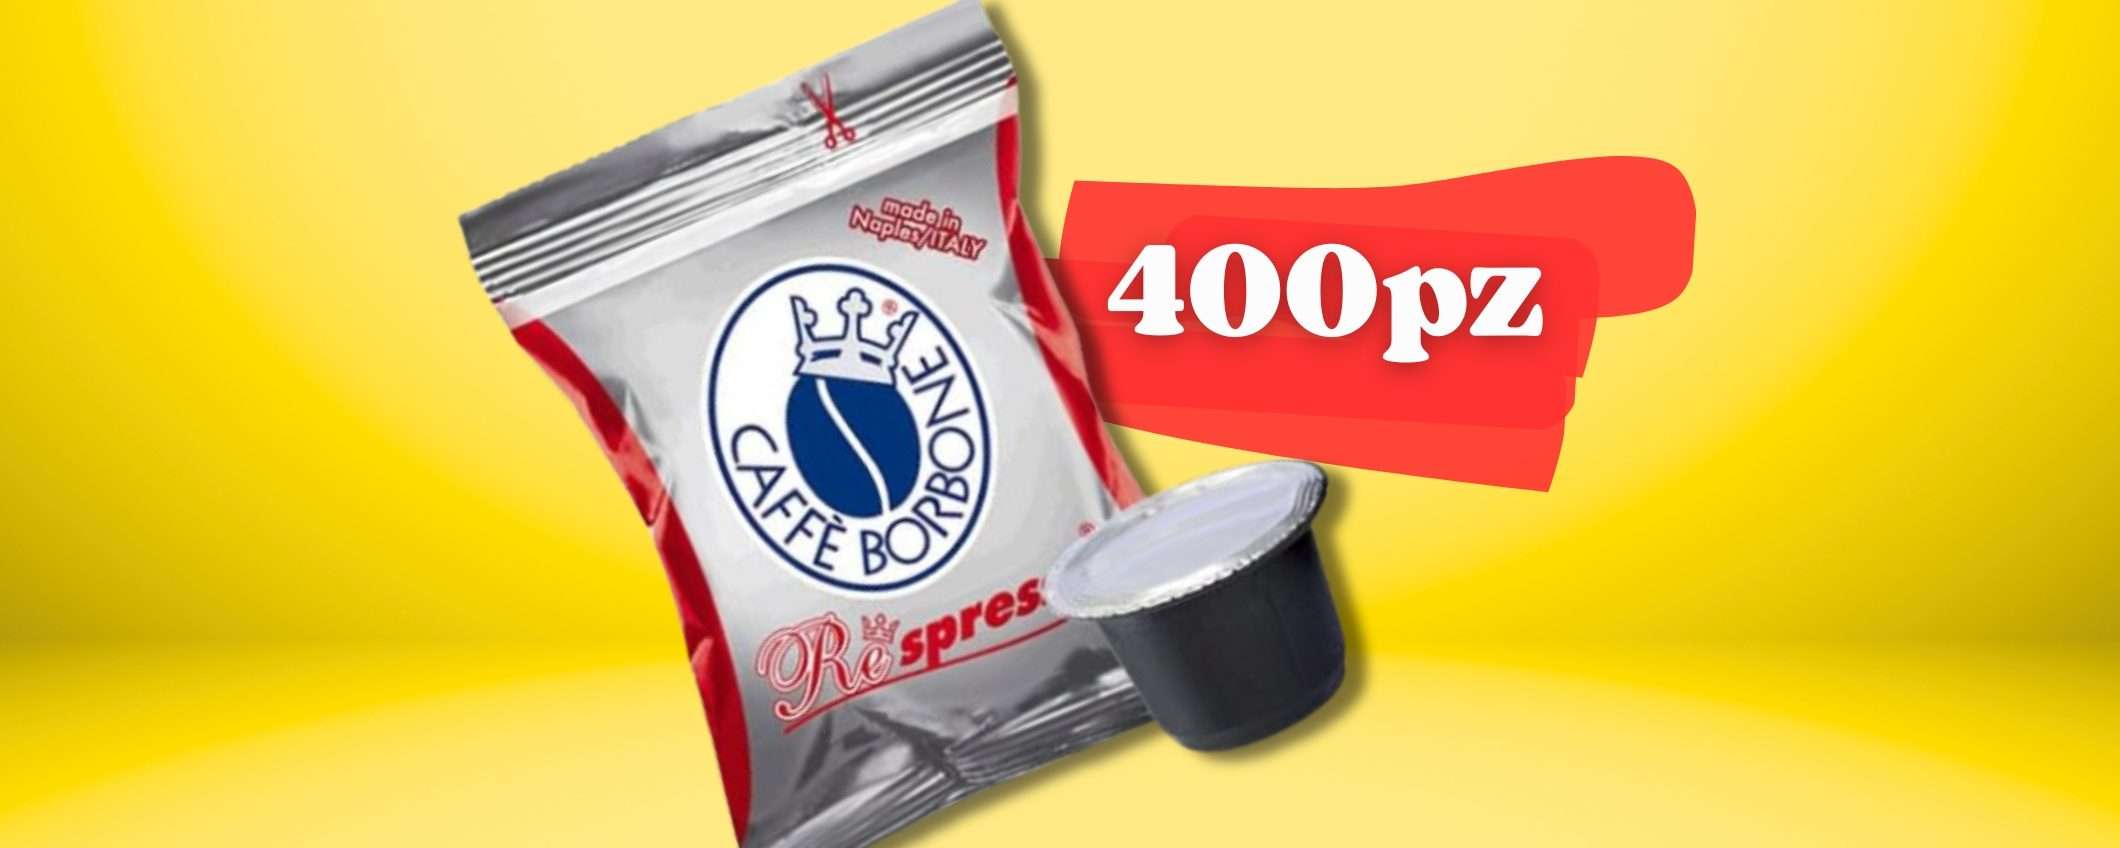 400 capsule Caffè Borbone Nespresso: una tazzina di ENERGIA a 0.16€ cad